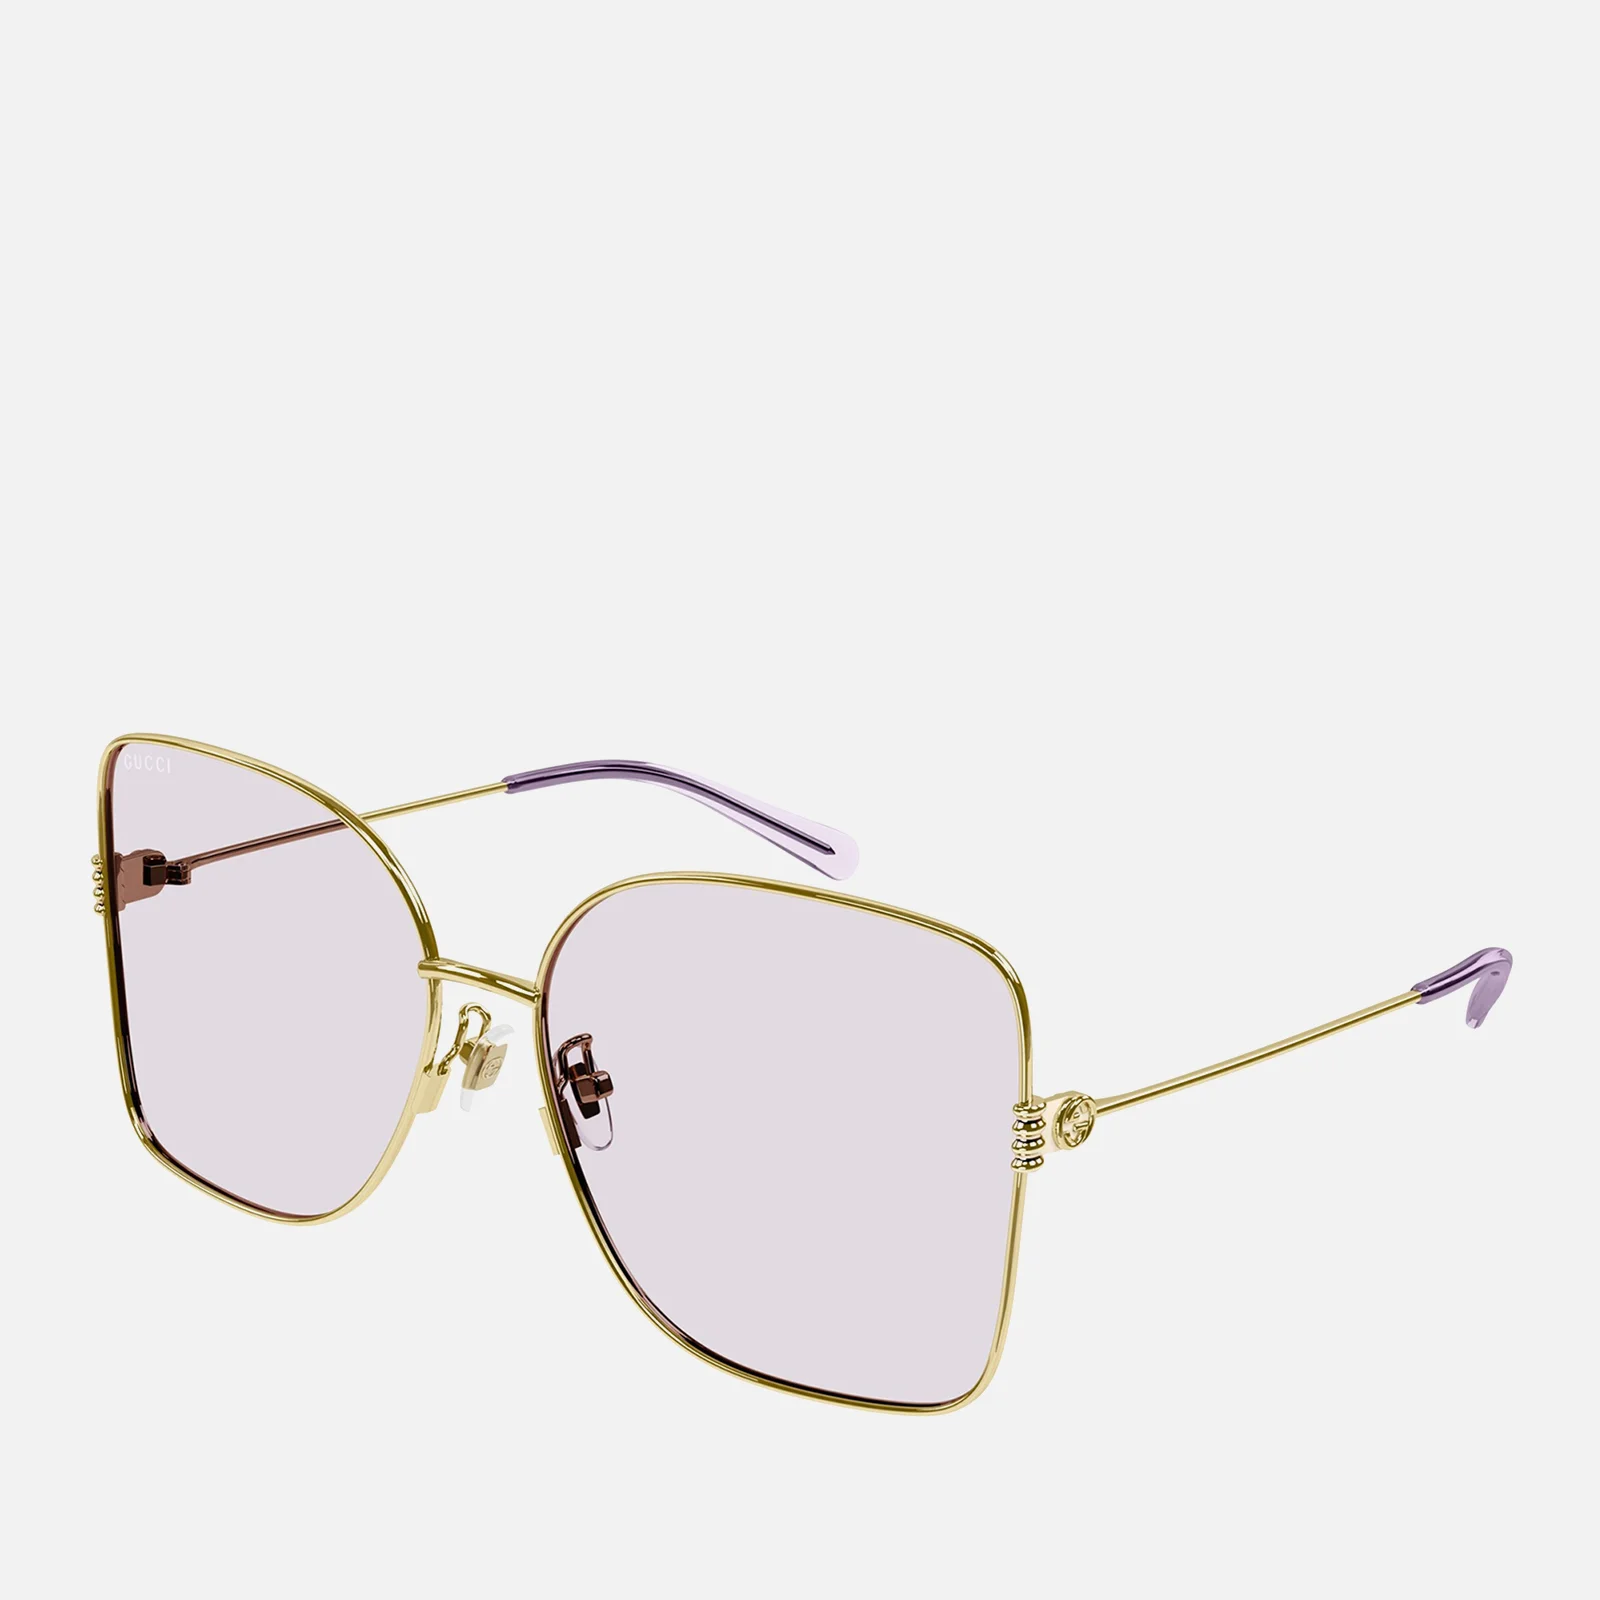 Gucci Not A Fork Metal Rectangular-Frame Sunglasses Image 1